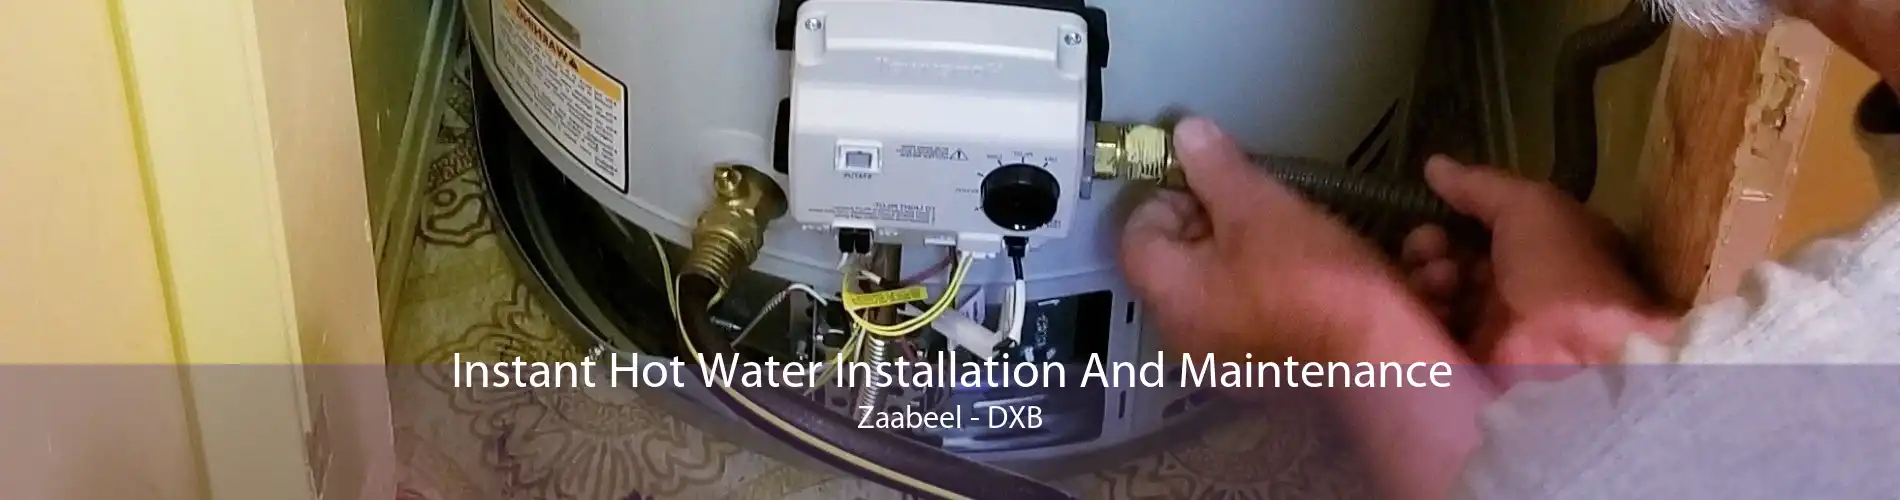 Instant Hot Water Installation And Maintenance Zaabeel - DXB